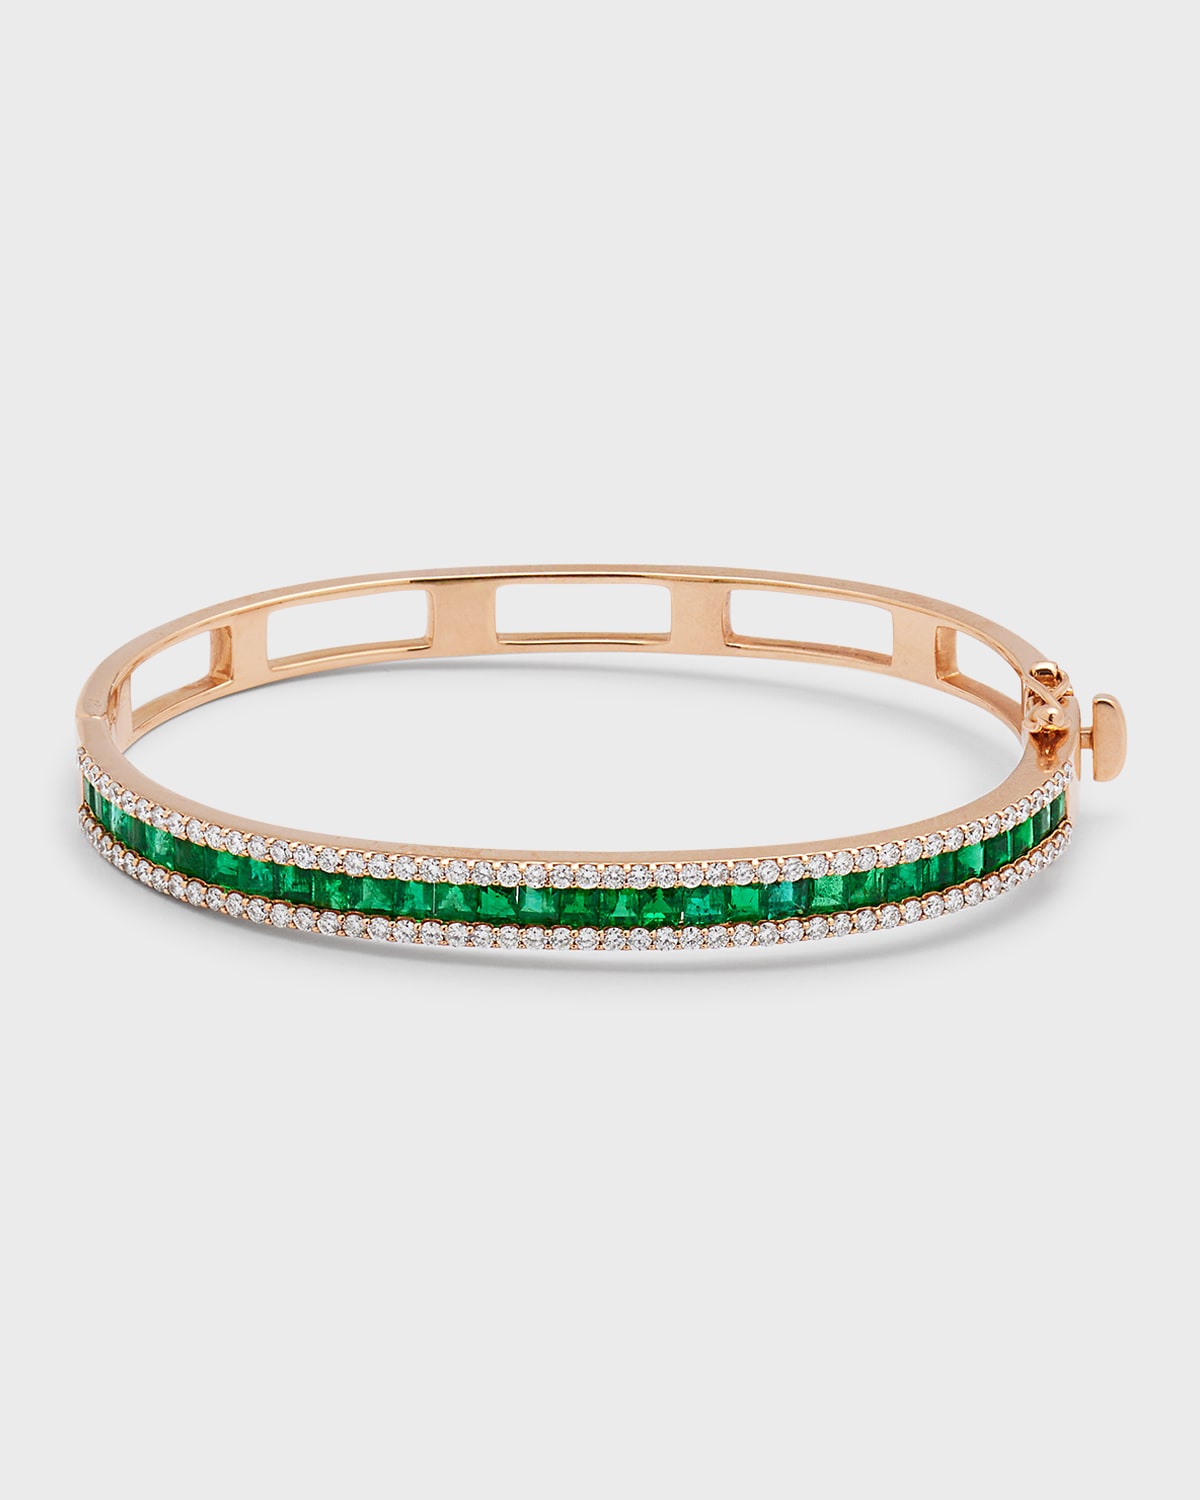 Beegoddess Mondrian Gold Emerald & Diamond Bracelet